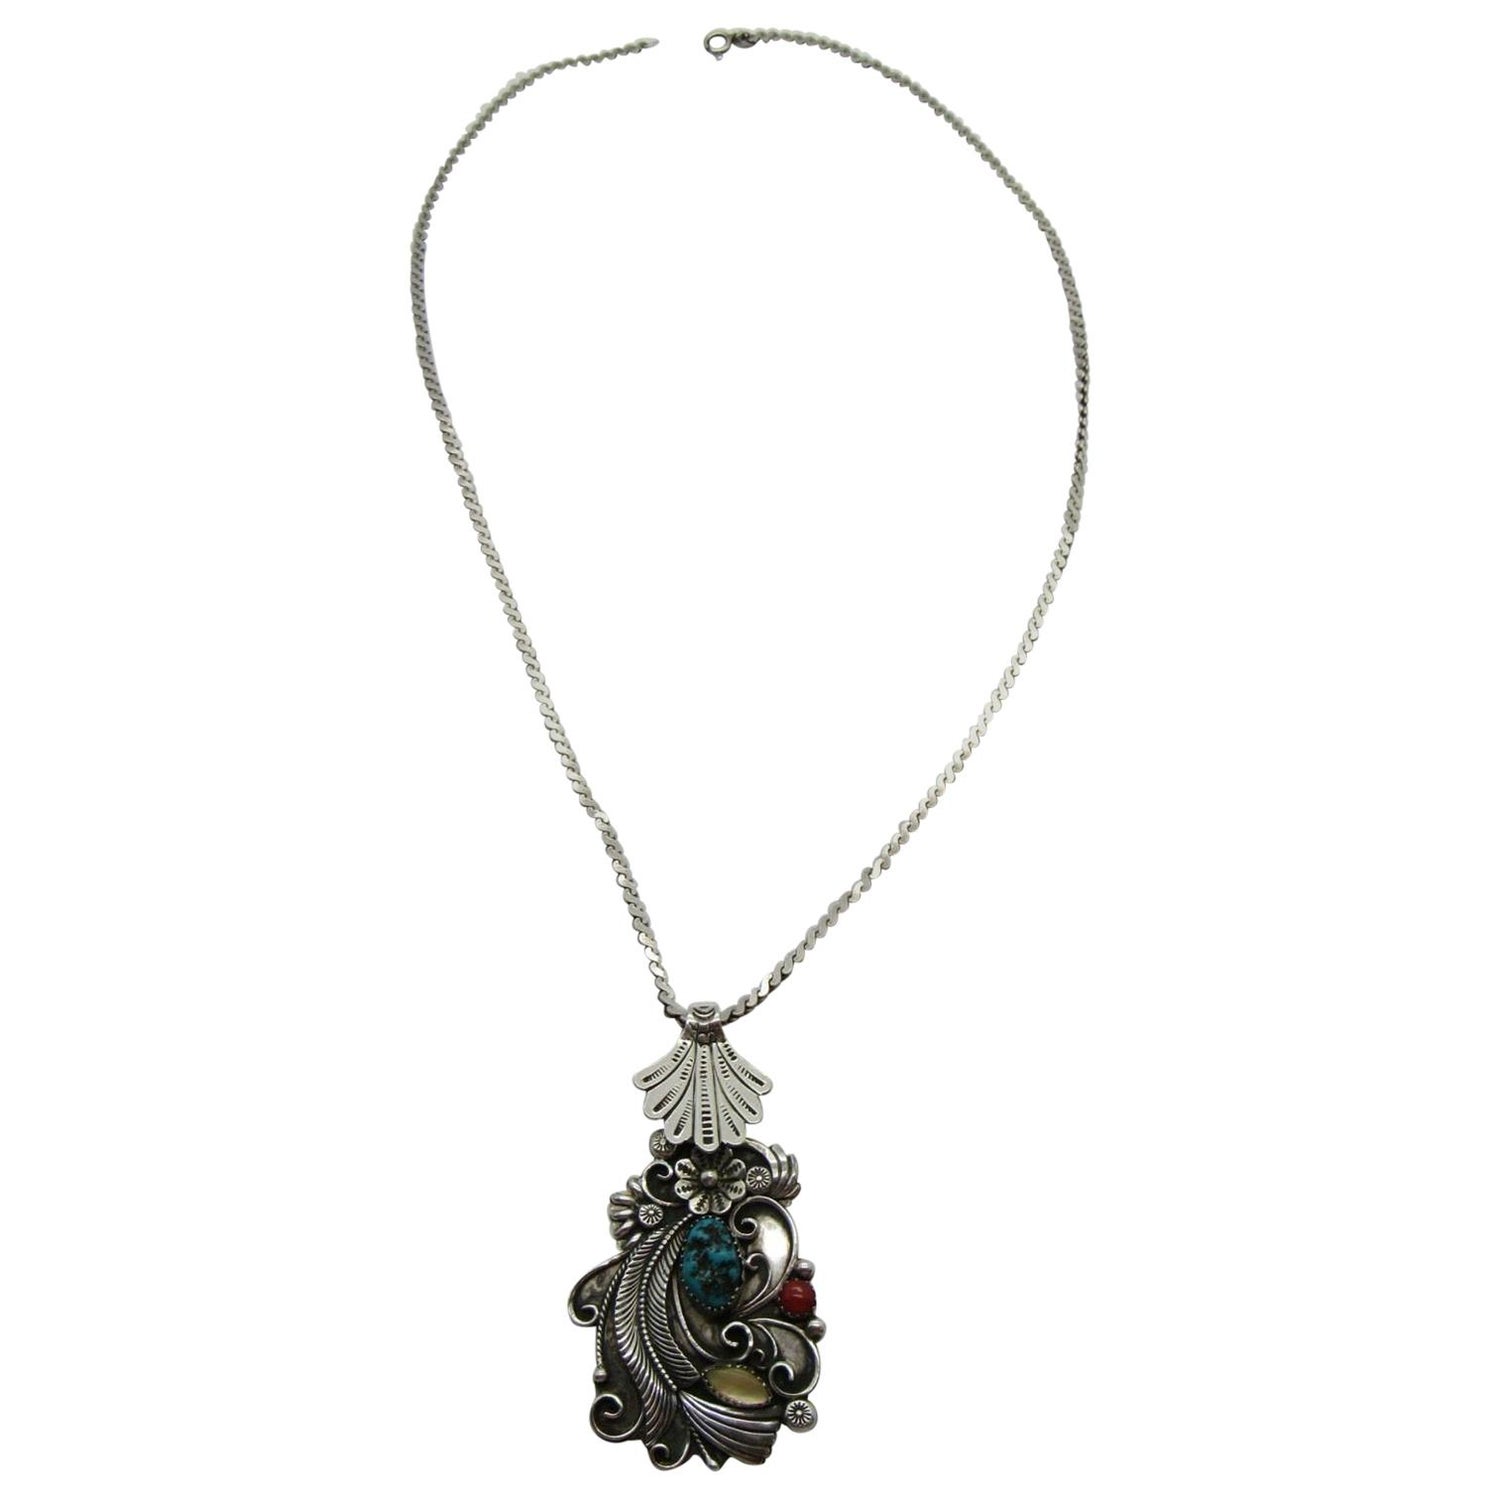 Retro Tibetan Jewelry - 3 For Sale on 1stDibs